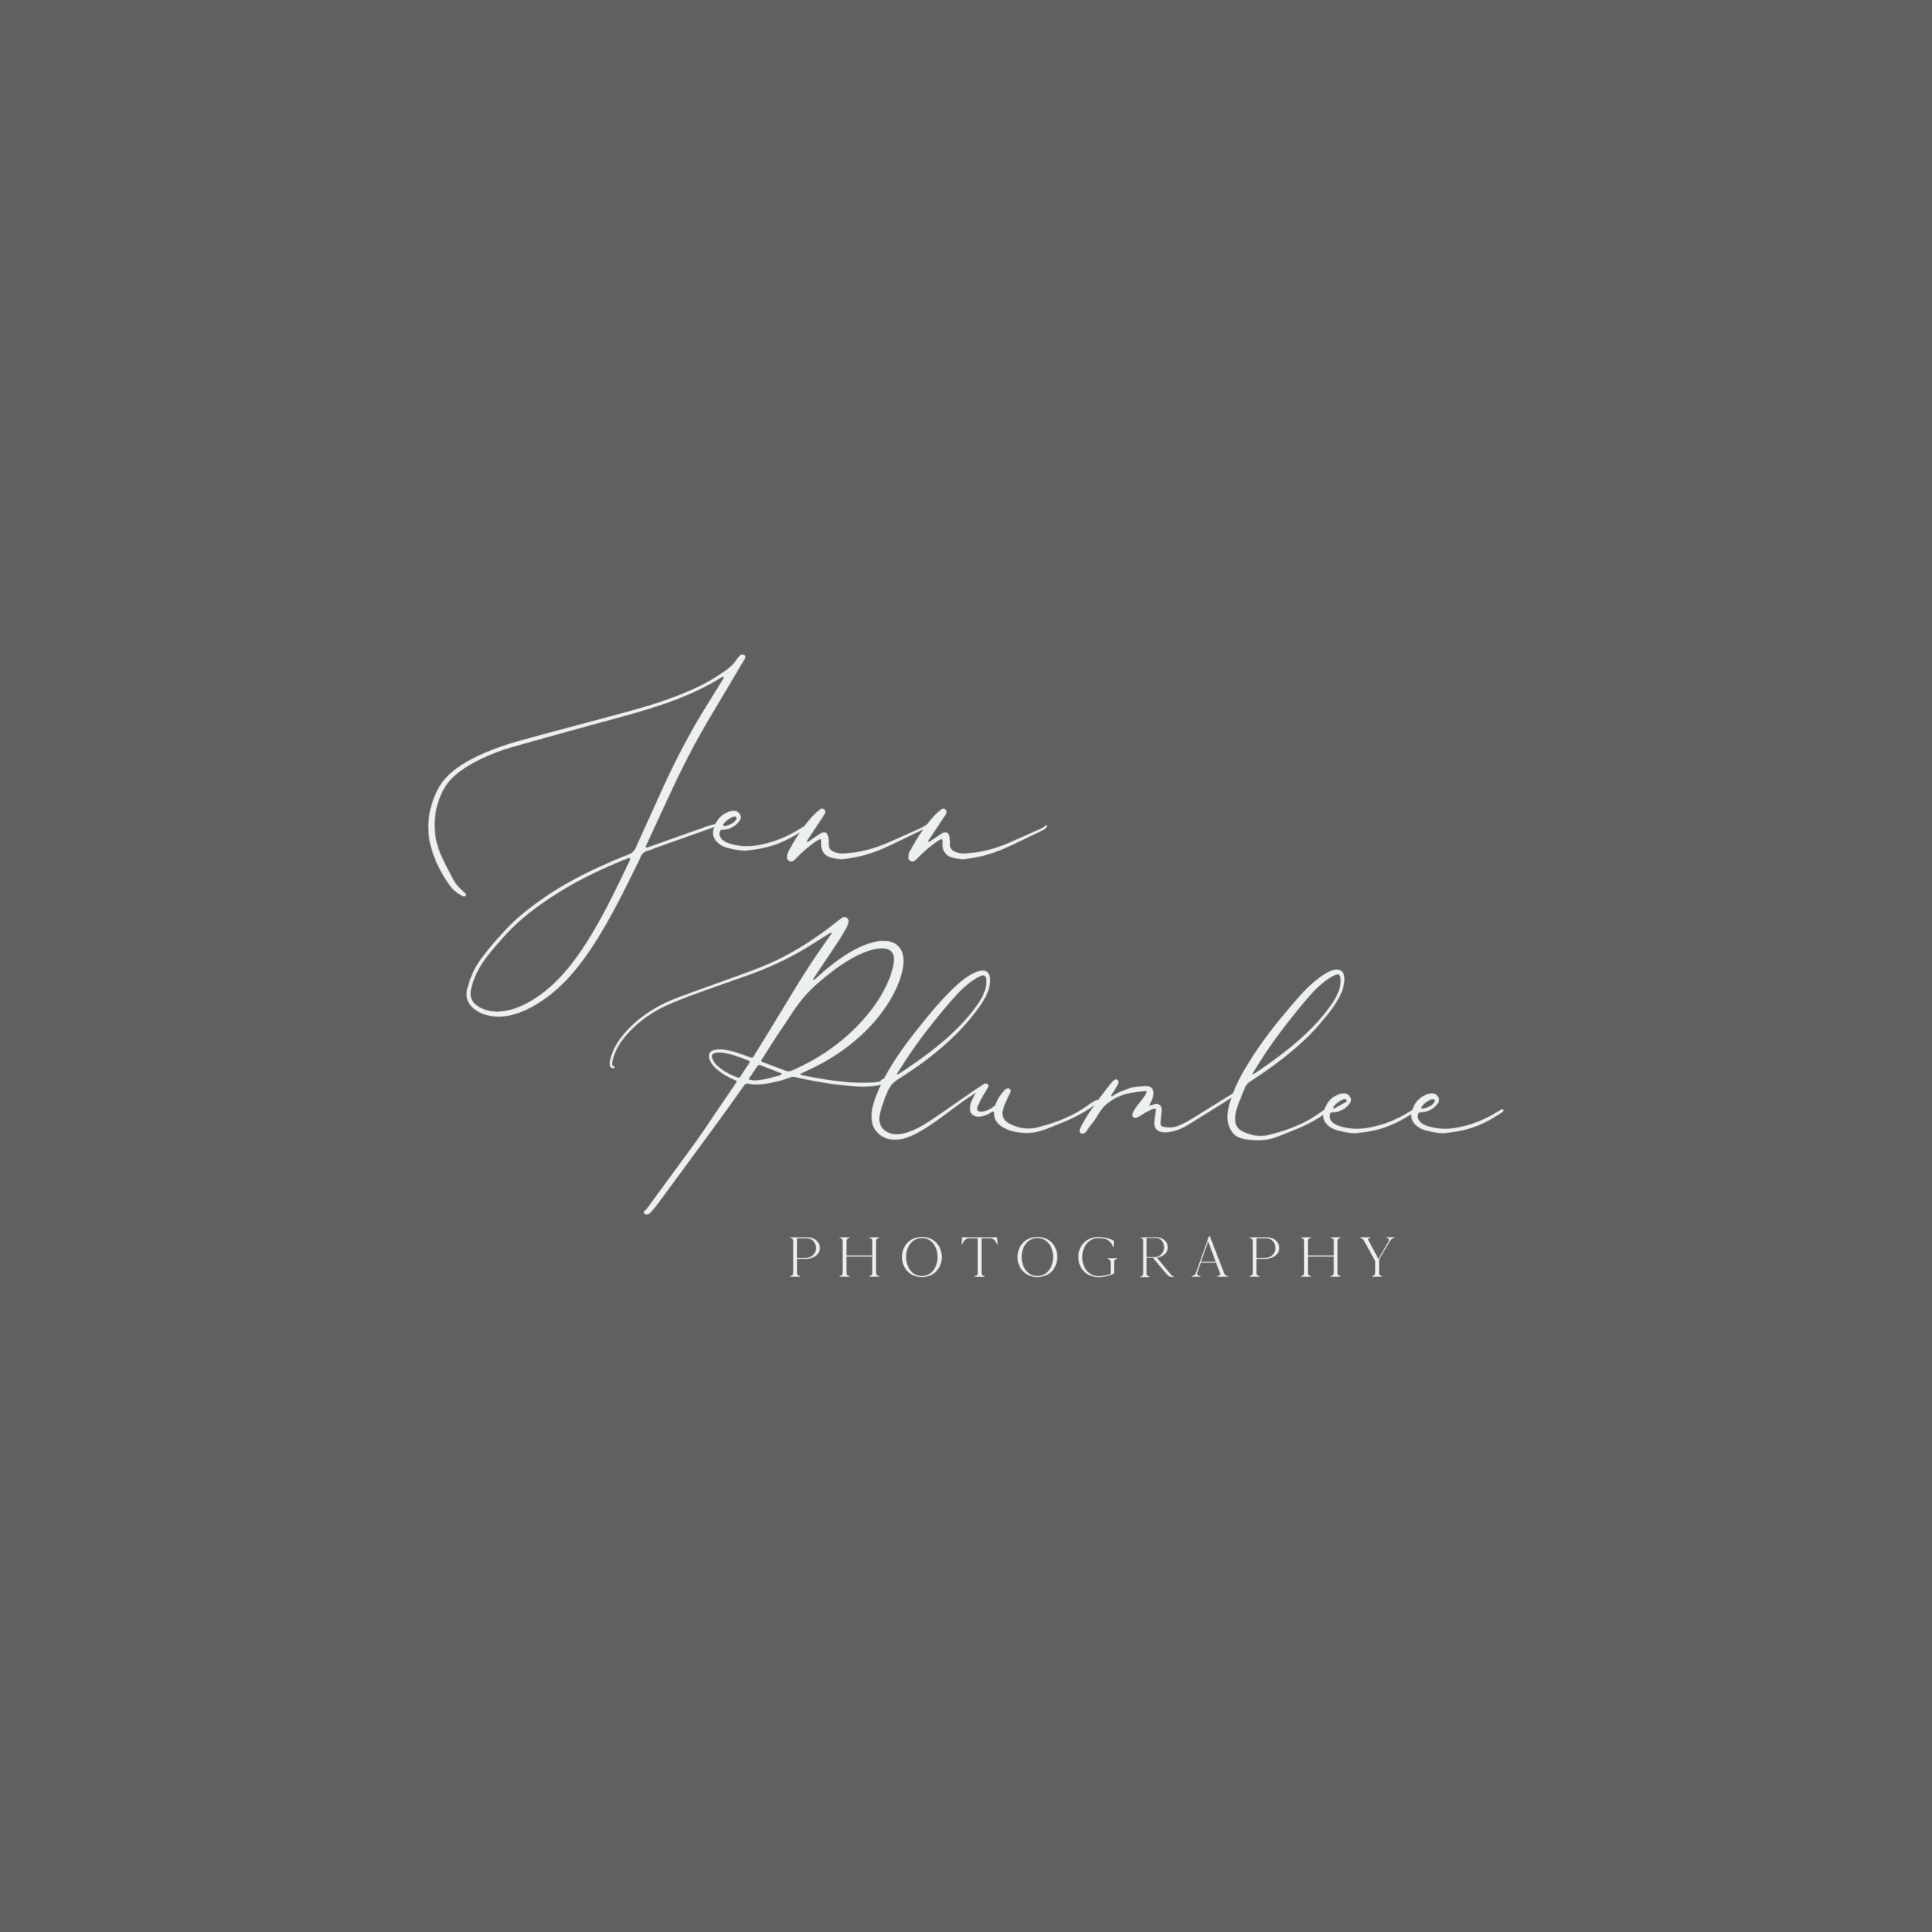 Jenn Plumlee Photography primary logo